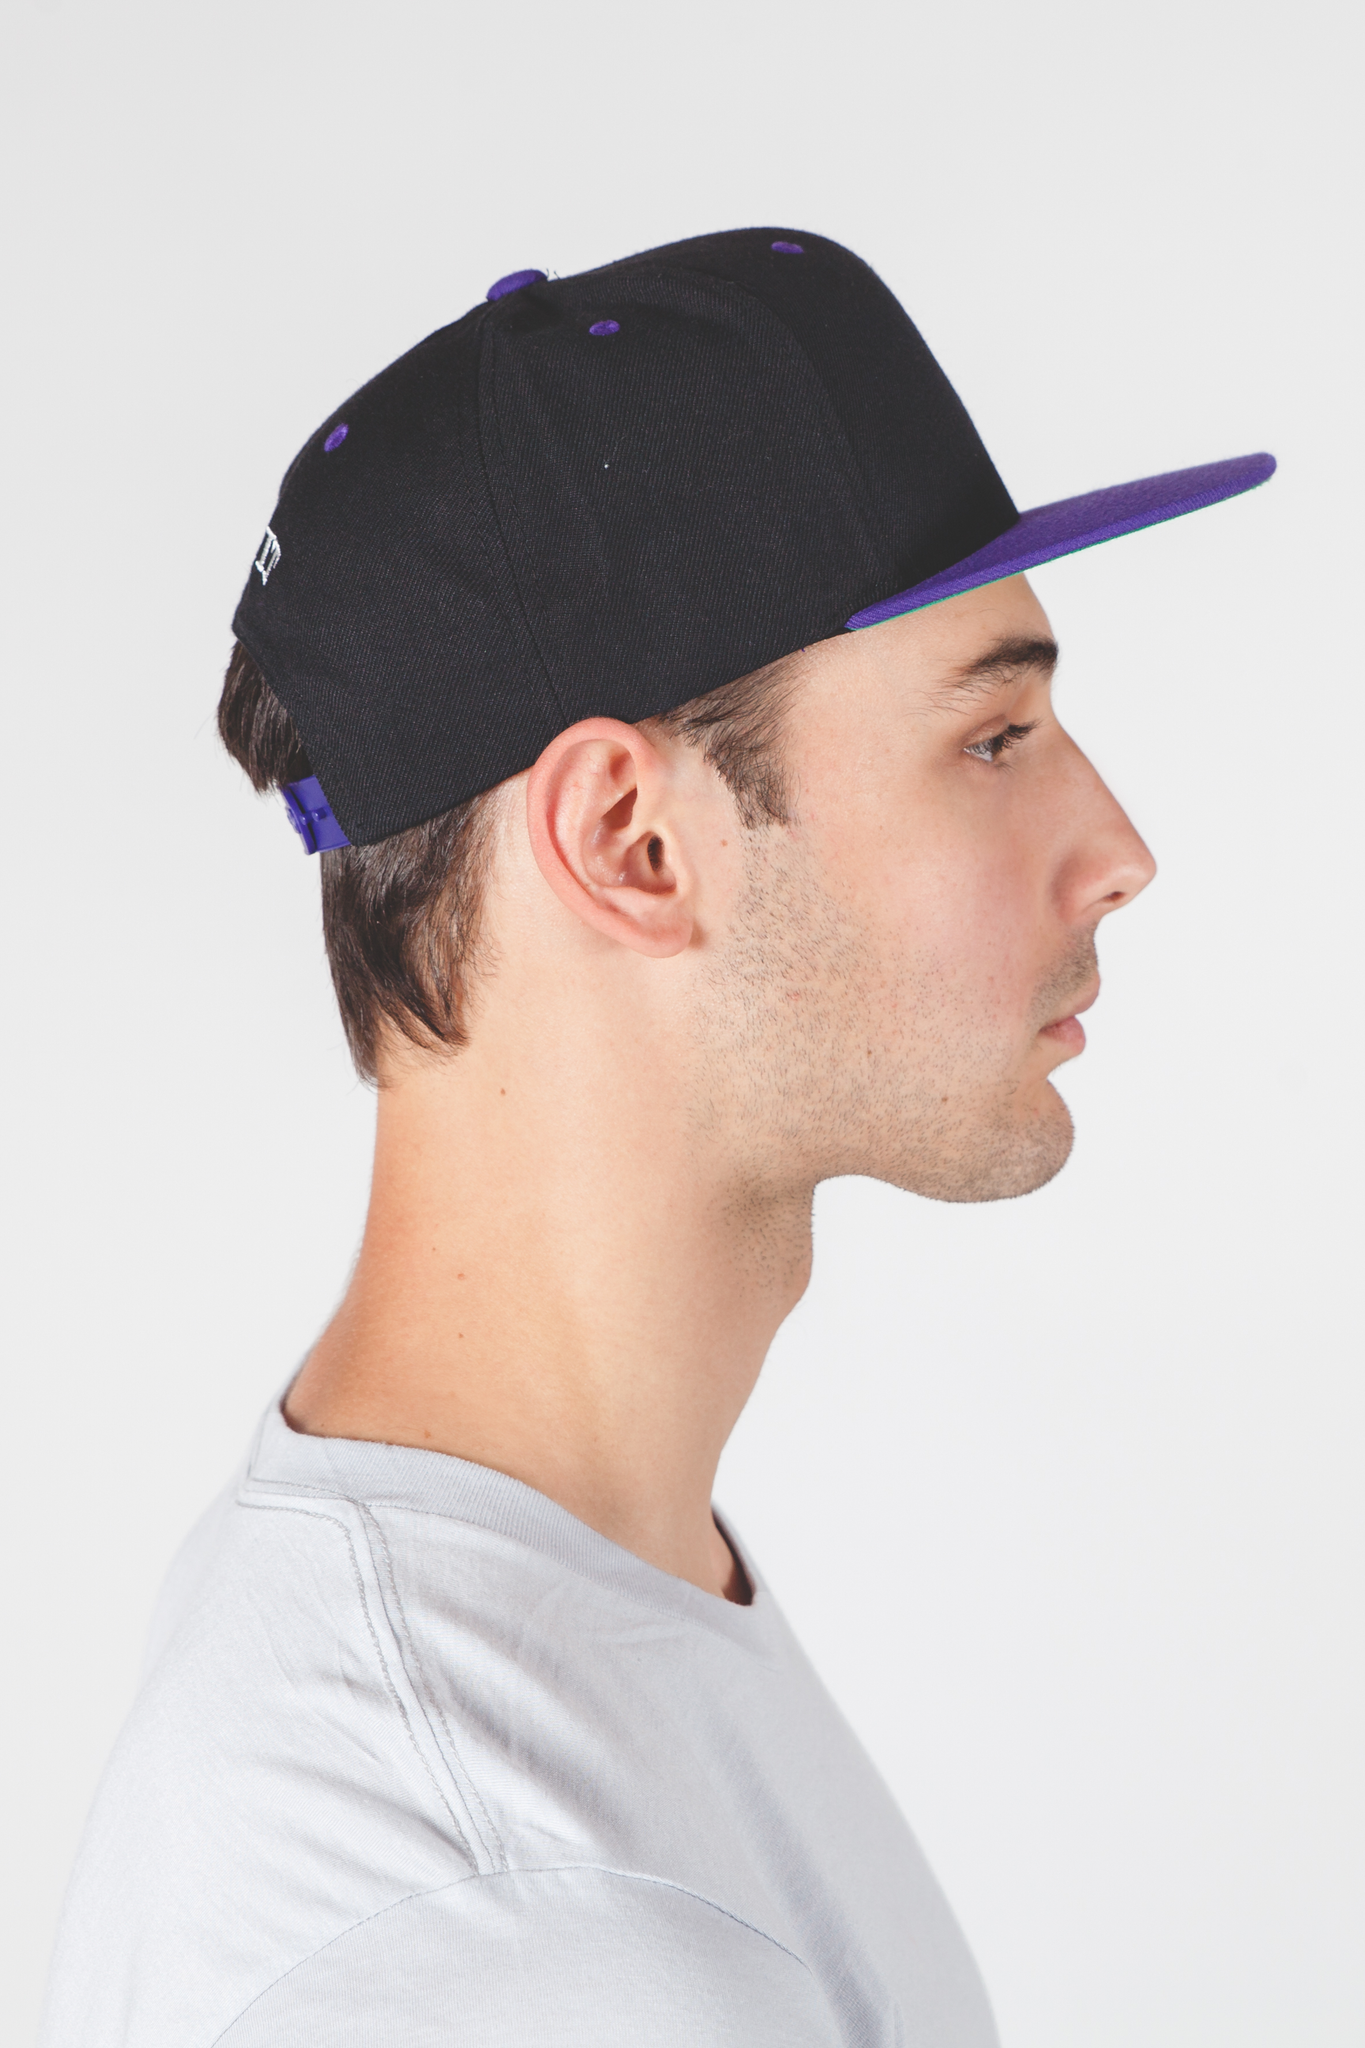 Flat Brim Adjustable Snapback Hat Cap - Black/Purple for Men